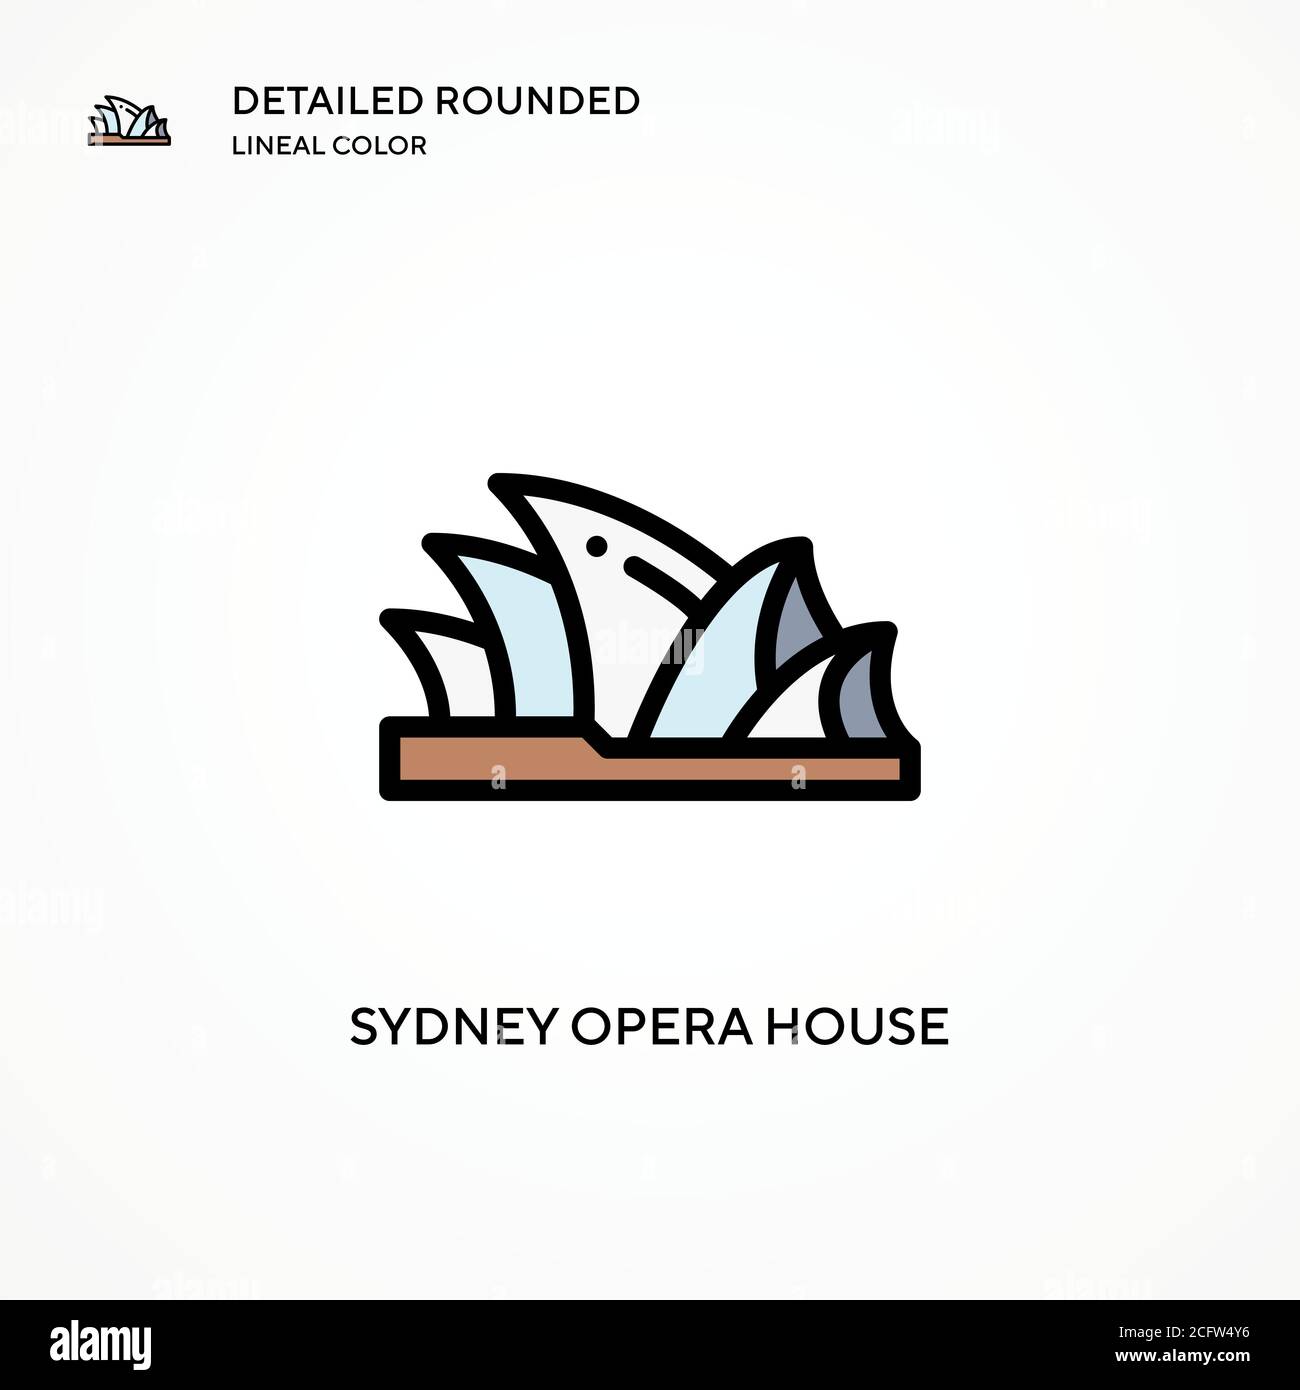 Sydney Opera House Vektor-Symbol. Moderne Vektorgrafik Konzepte. Einfach zu bearbeiten und anzupassen. Stock Vektor